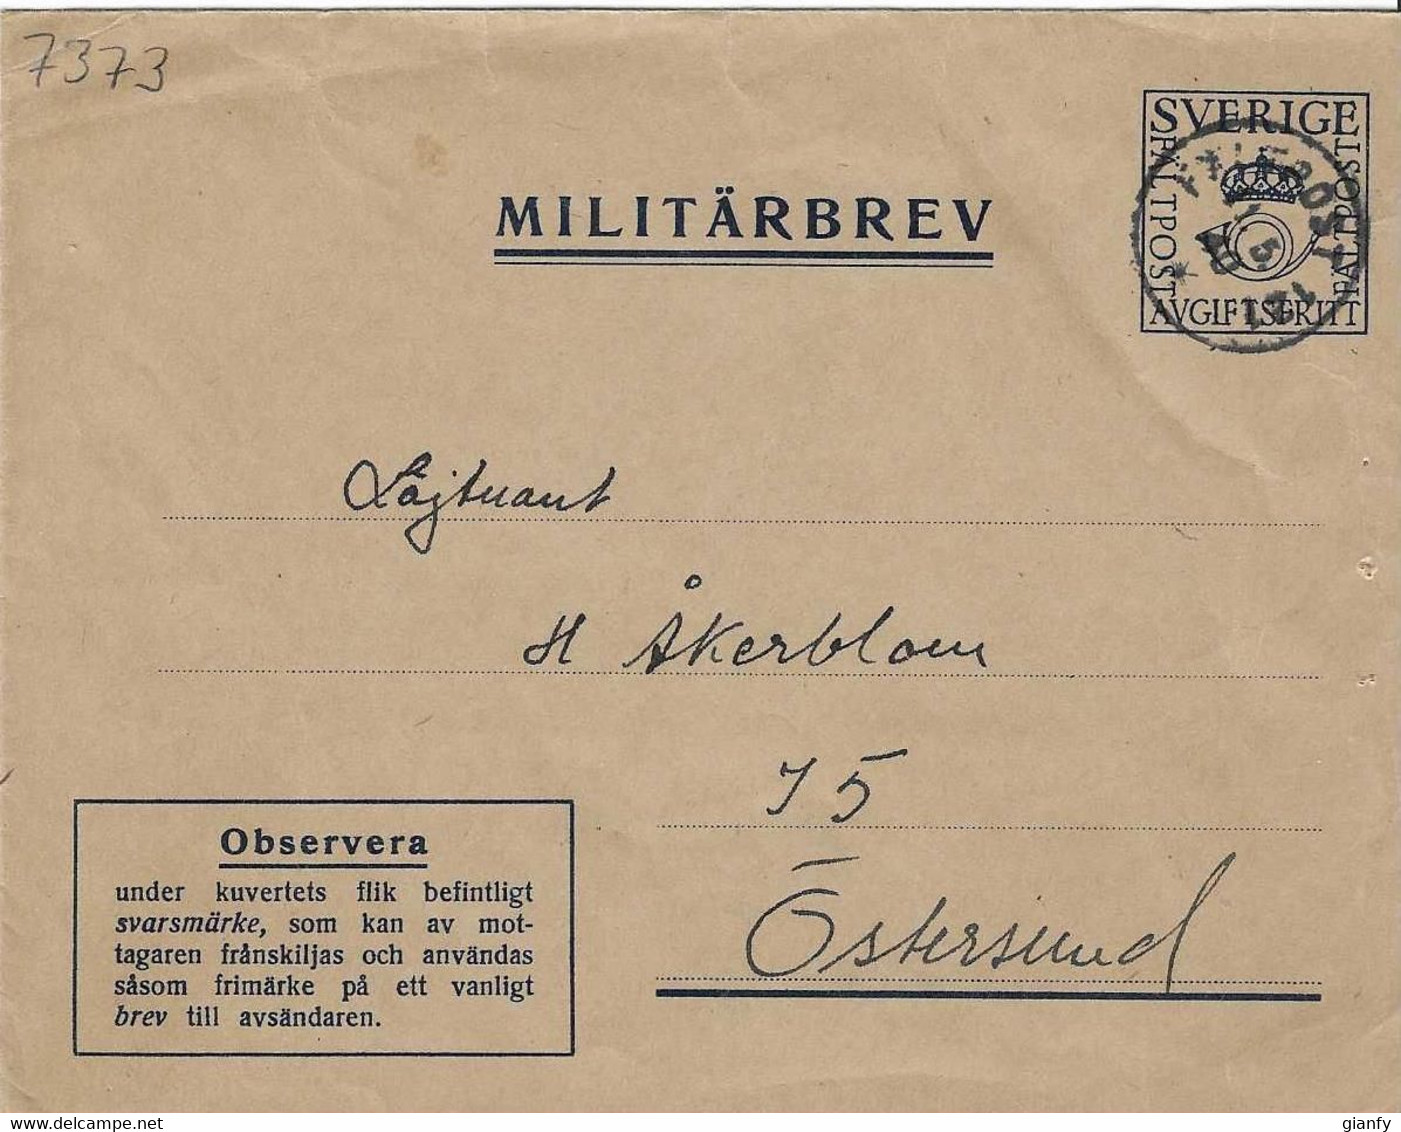 SVERIGE MILITARBREV WWII MILITARY ARMY COVER 11.5.1940 To OSTERSUND SWEDEN - Militärmarken